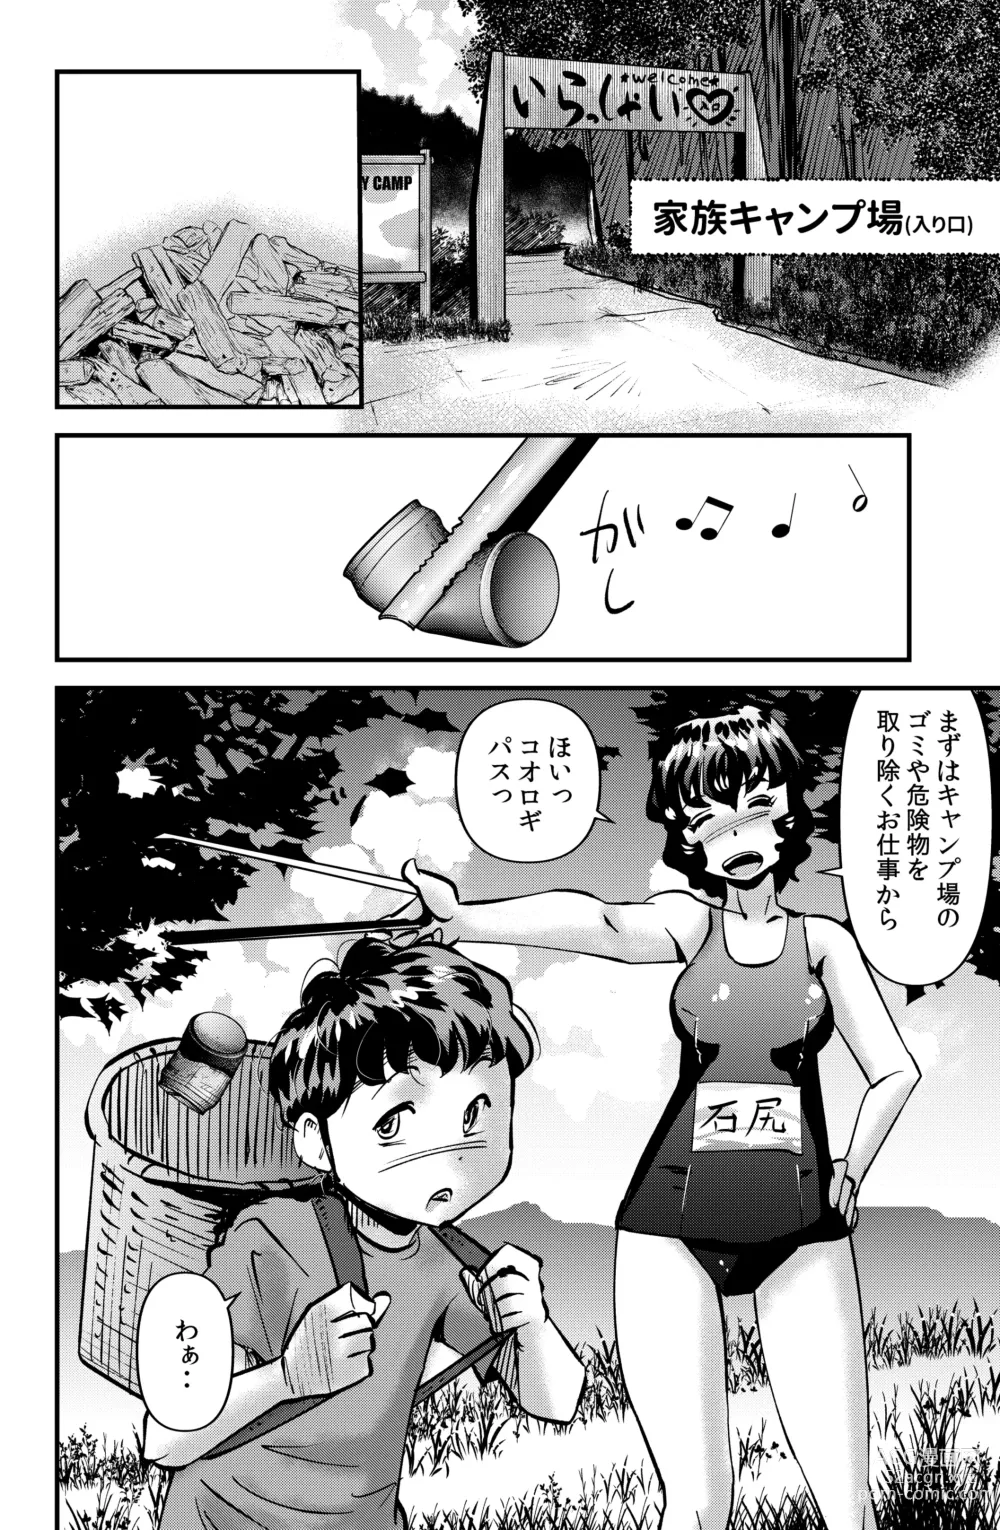 Page 6 of doujinshi Kazoku Camp 2